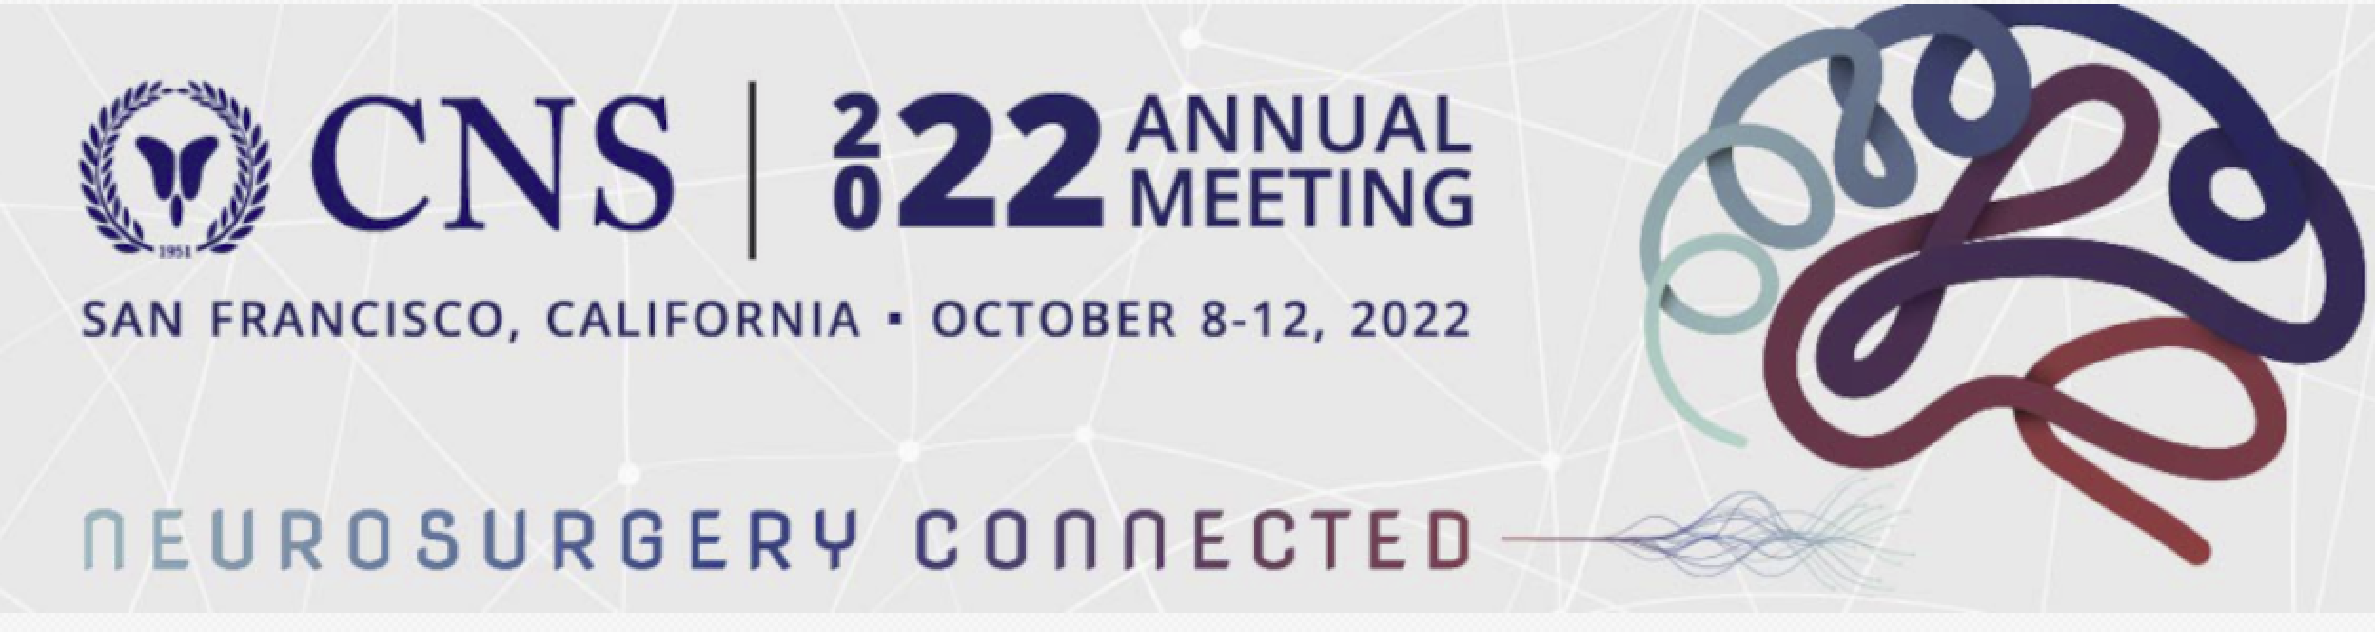 CNS 2022 ANNUAL MEETING